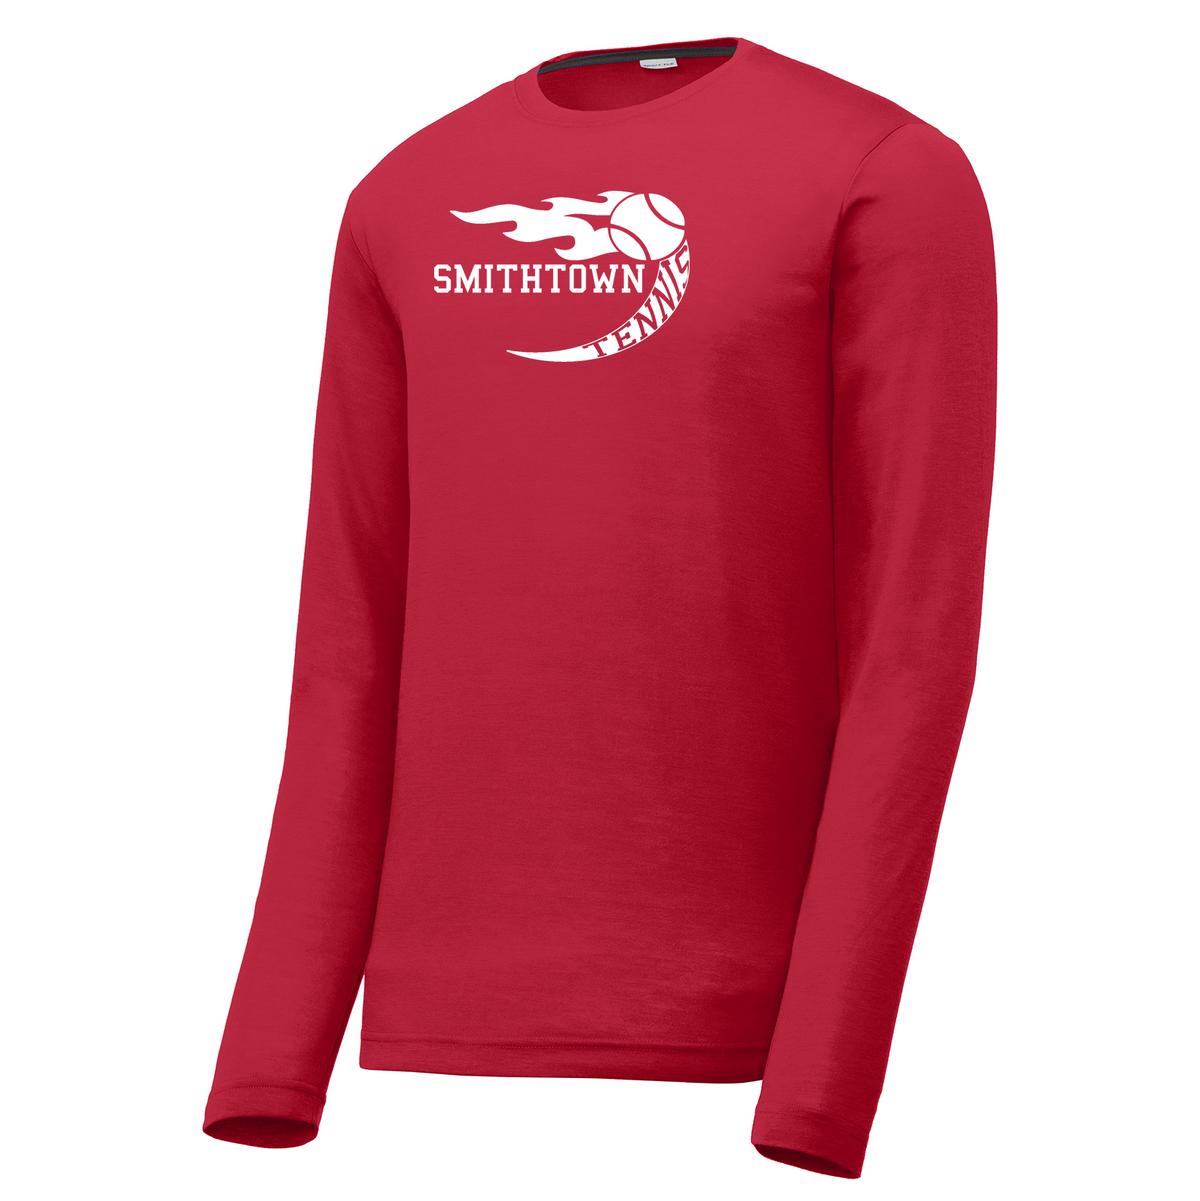 Smithtown Tennis Long Sleeve CottonTouch Performance Shirt